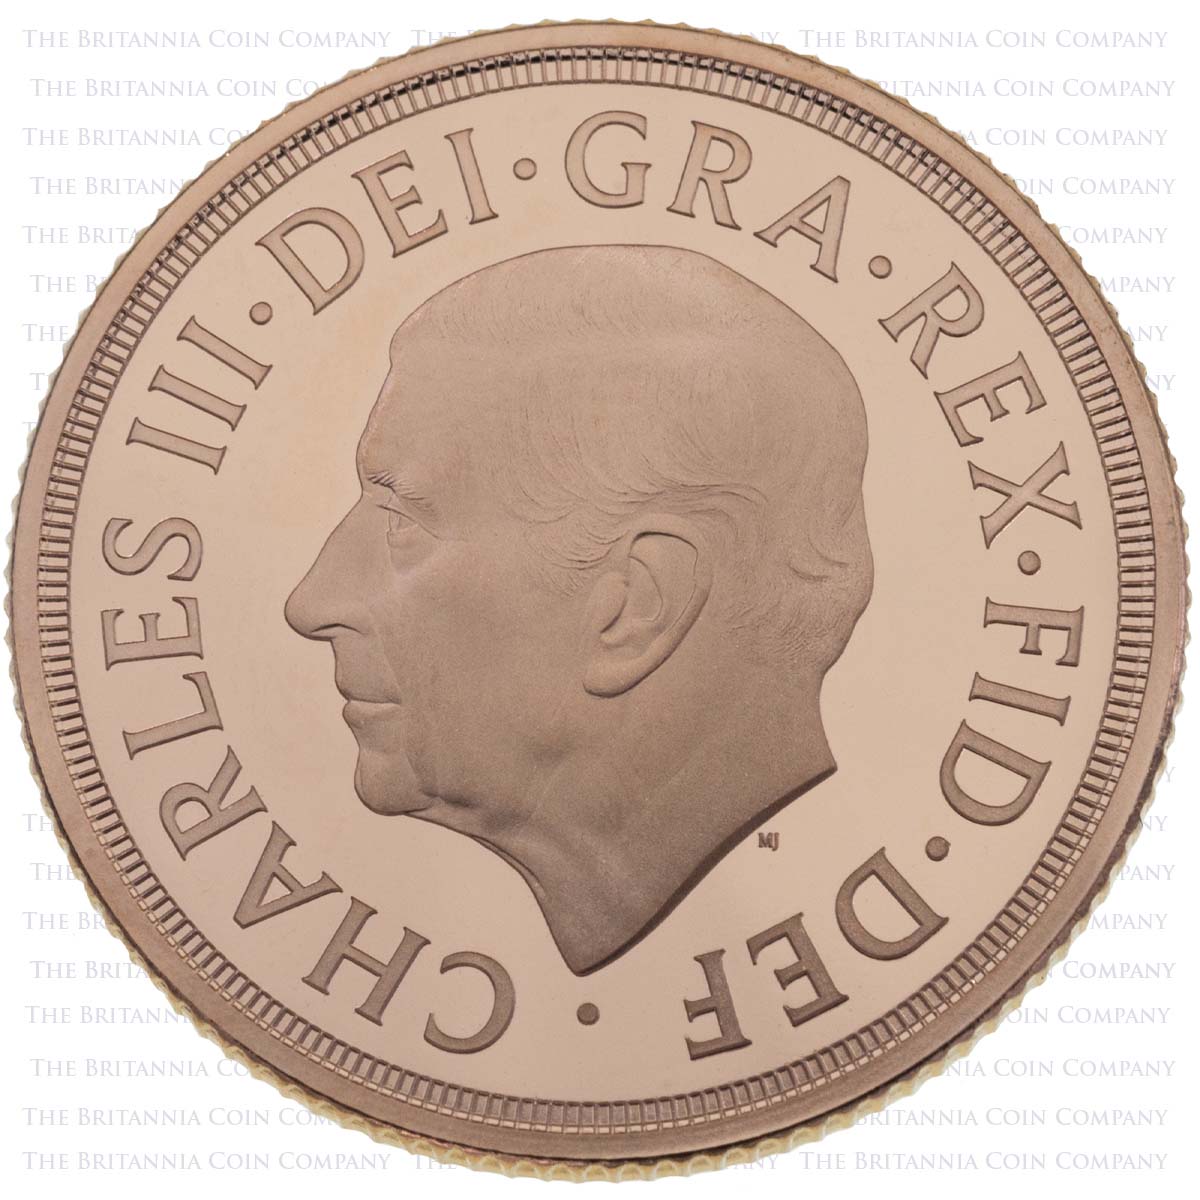 MSV22 2022 Charles III Gold Proof Sovereign Queen Elizabeth II Memorial Coin Obverse